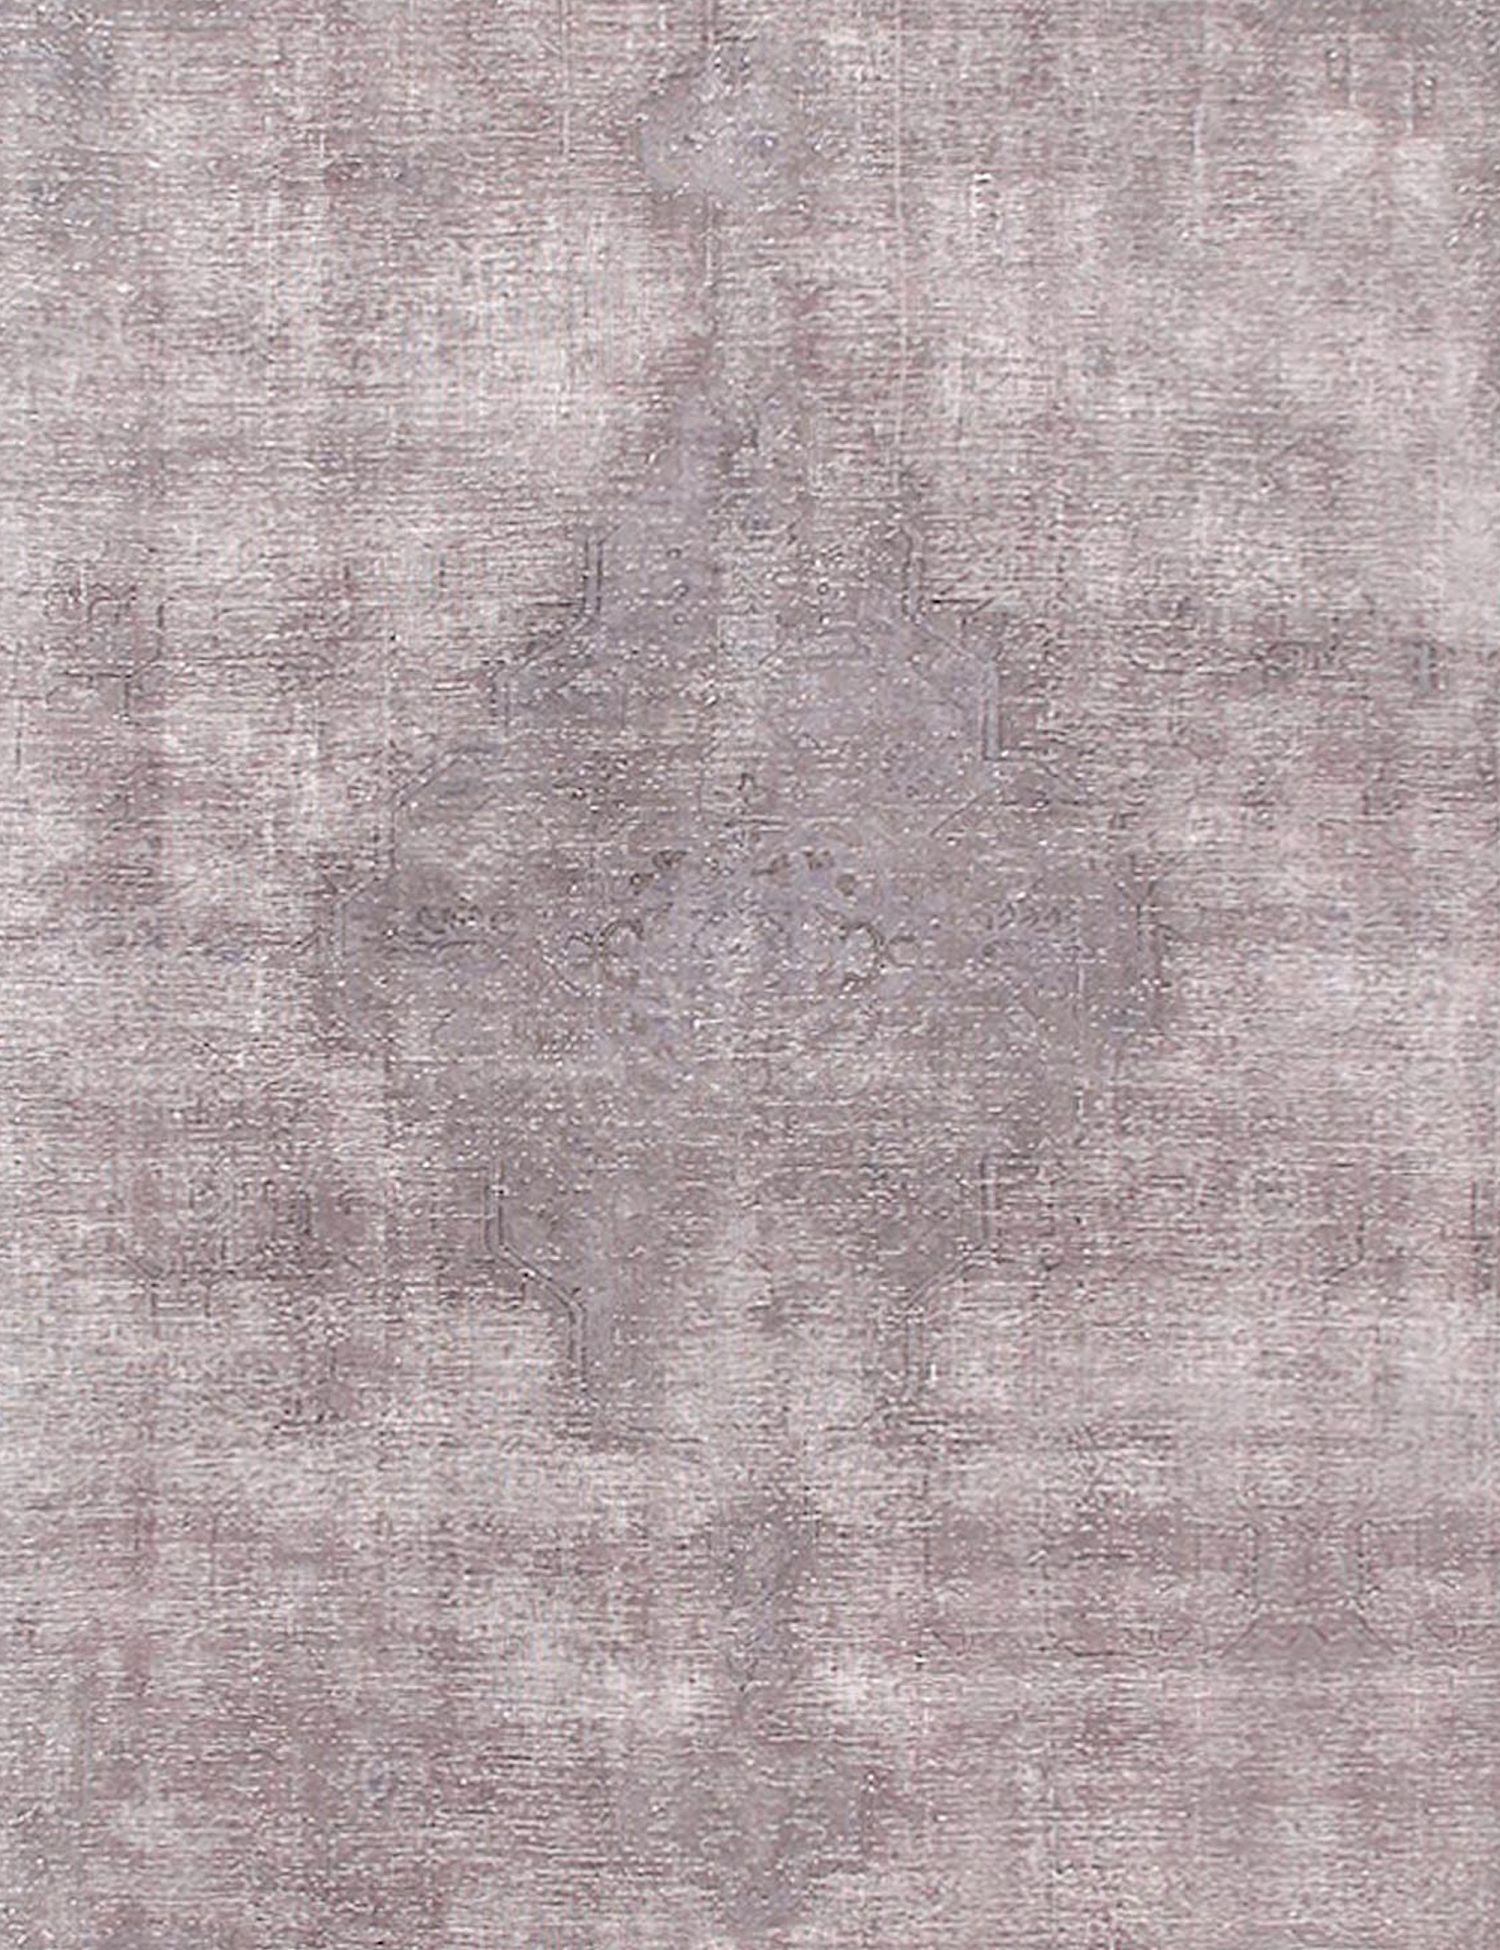 Persian Vintage Carpet  grey <br/>375 x 220 cm